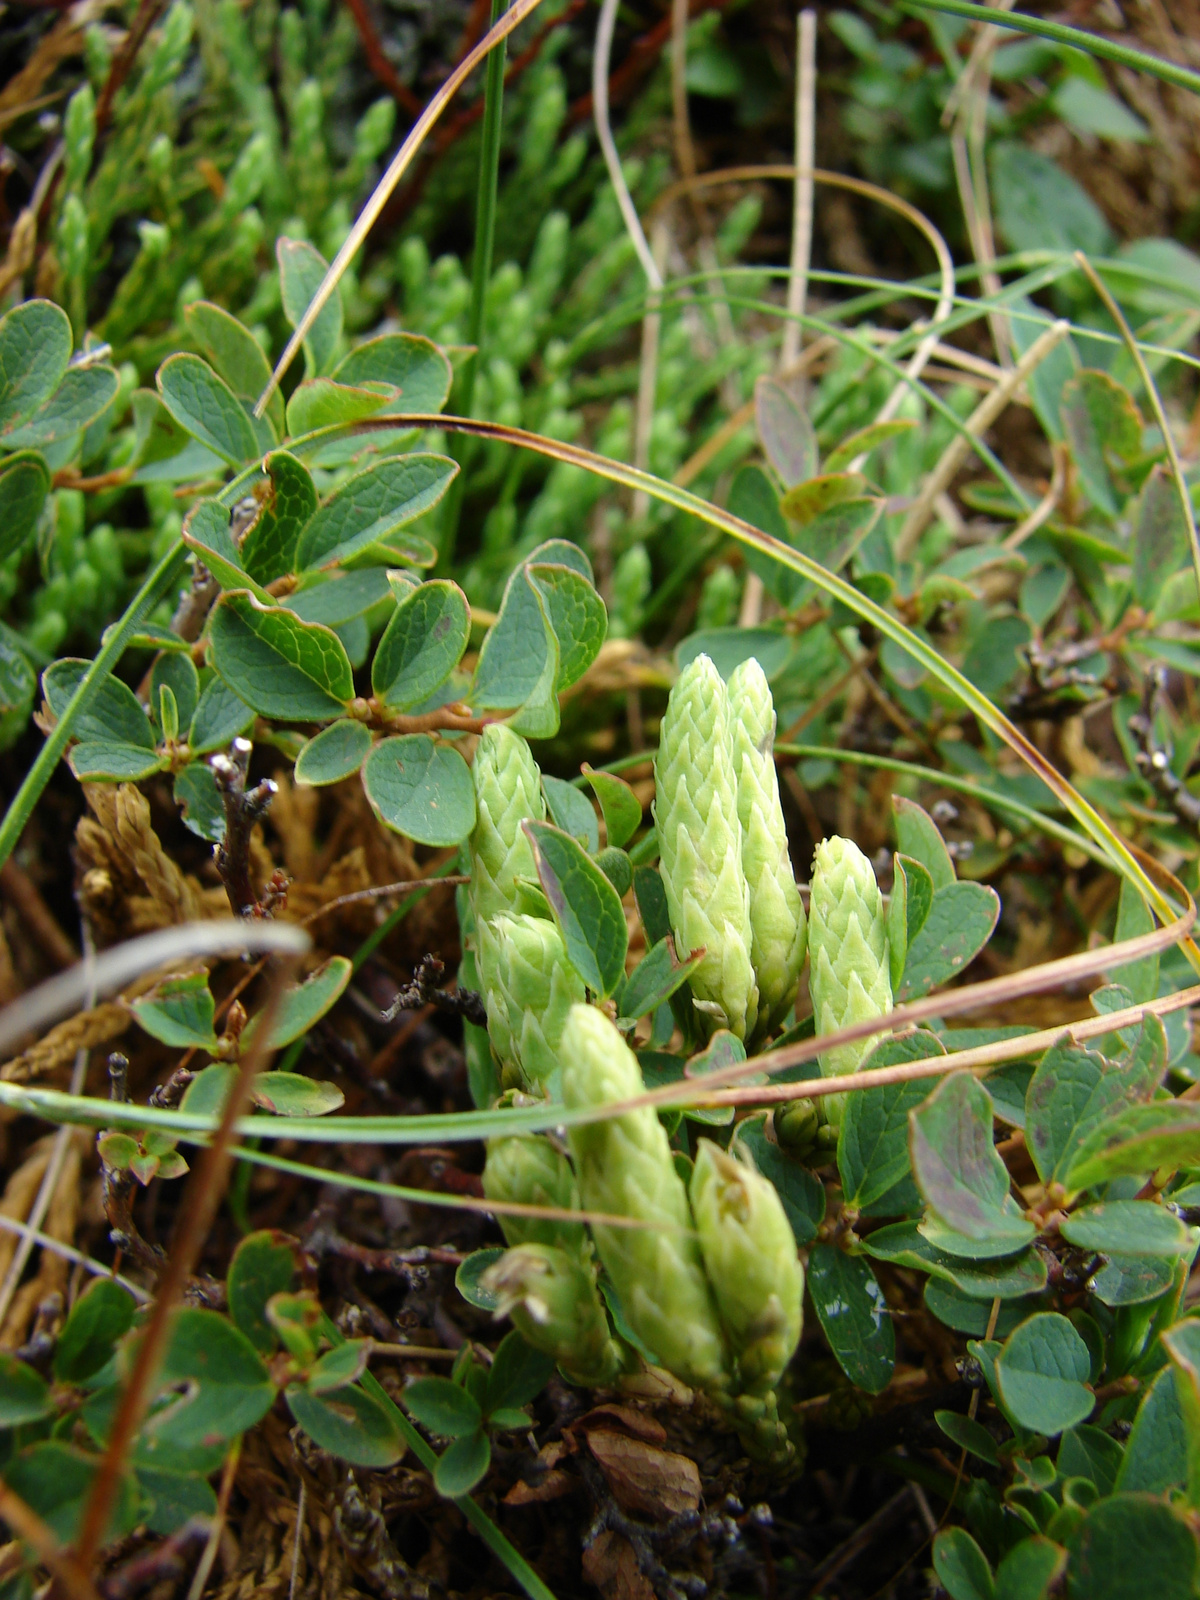 Havasi korpafű (Diphasium alpinum)